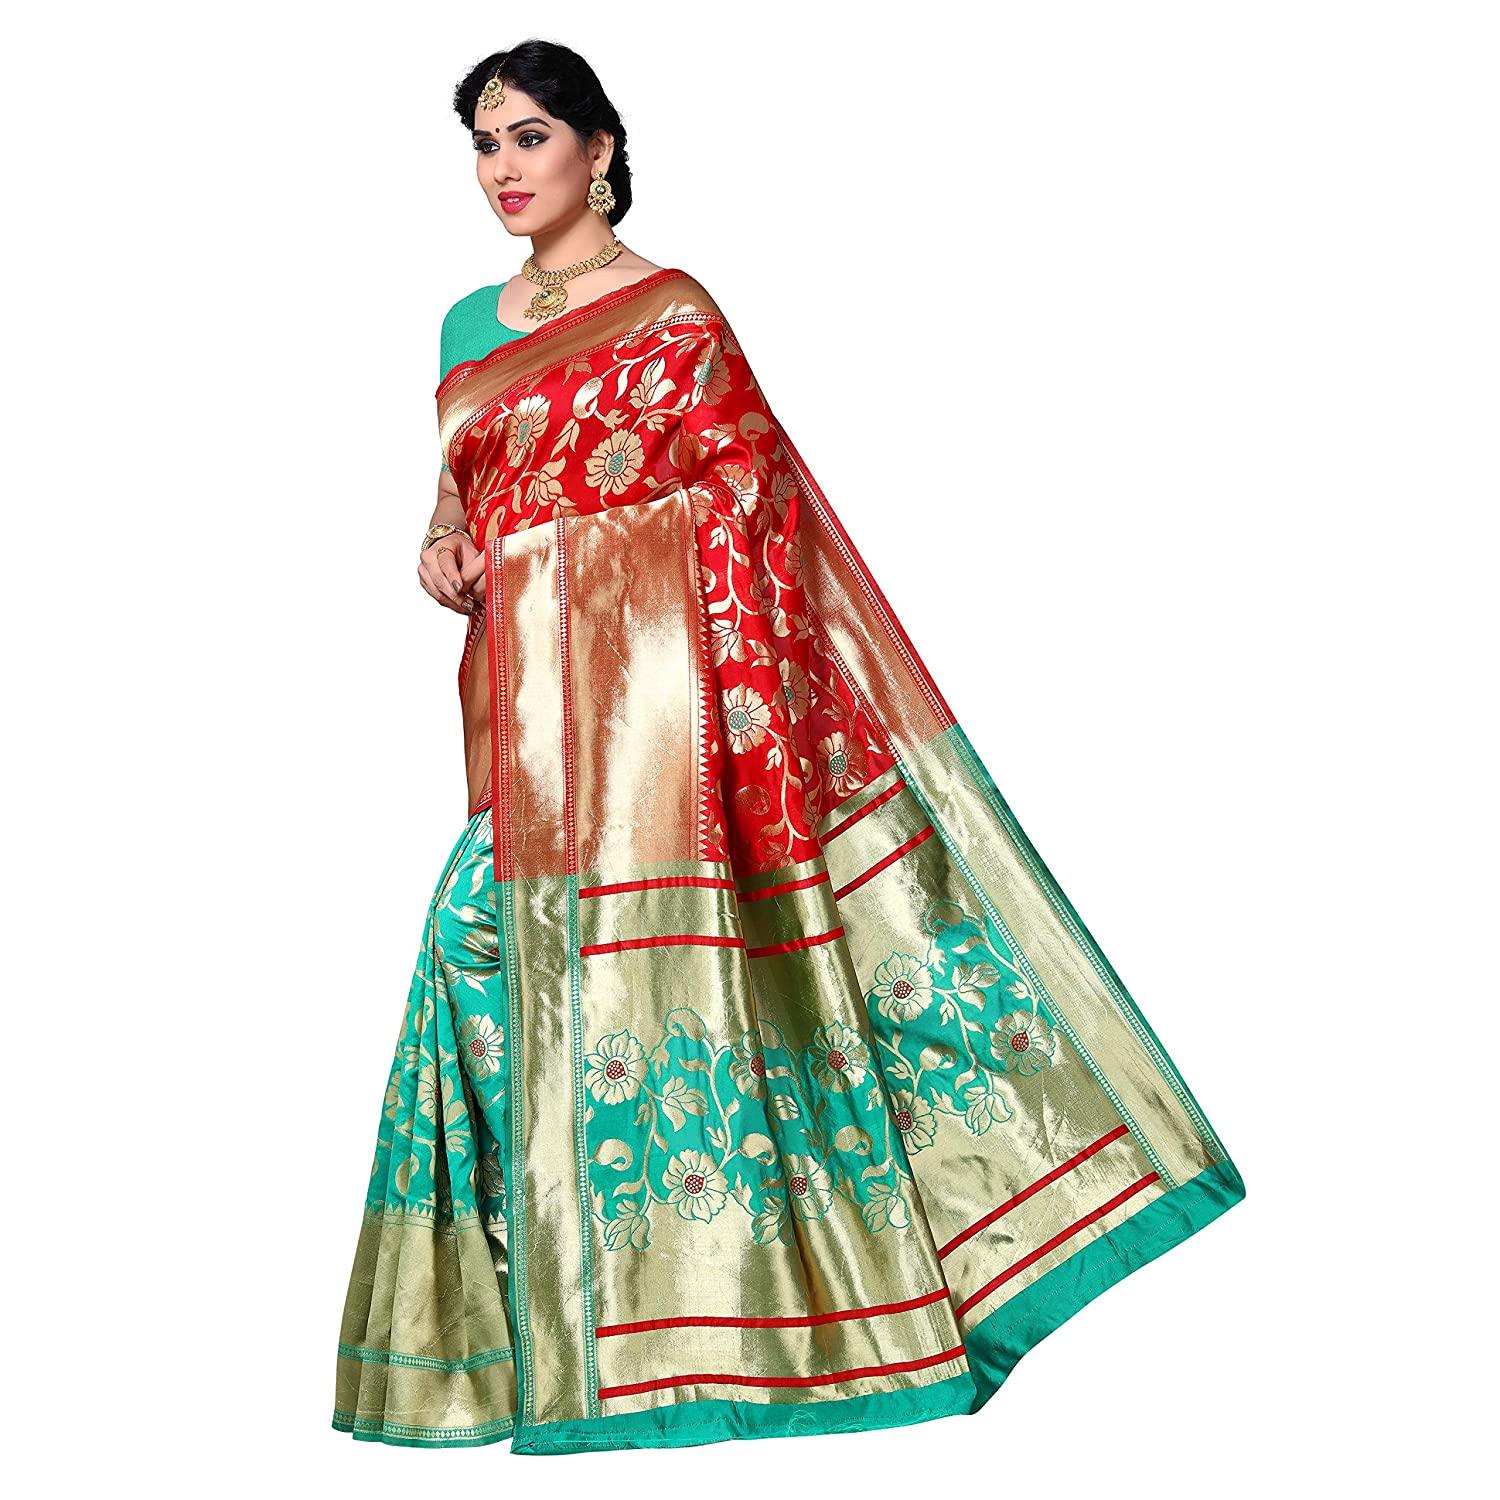 Women's Kanjivaram Saree With Blouse Piece Indian Sari Traditional Saree Wedding Dress Handmade Famous Actress Style Party Wear Free Size Ethenic Wear Clothes - FajarShuruqSA